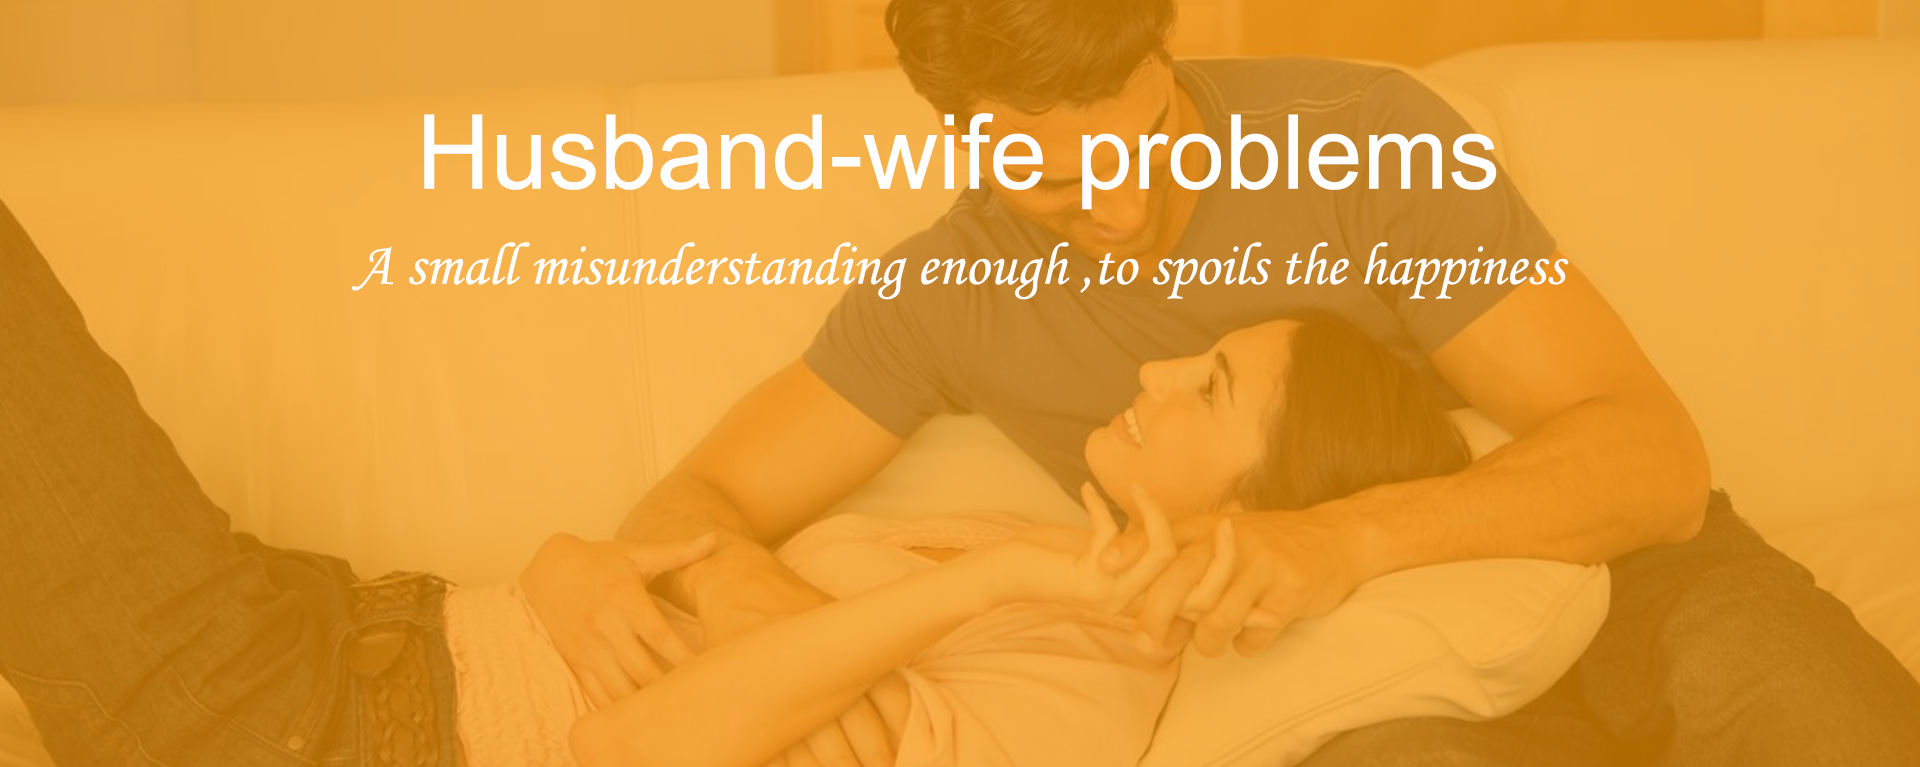 husband wife problems